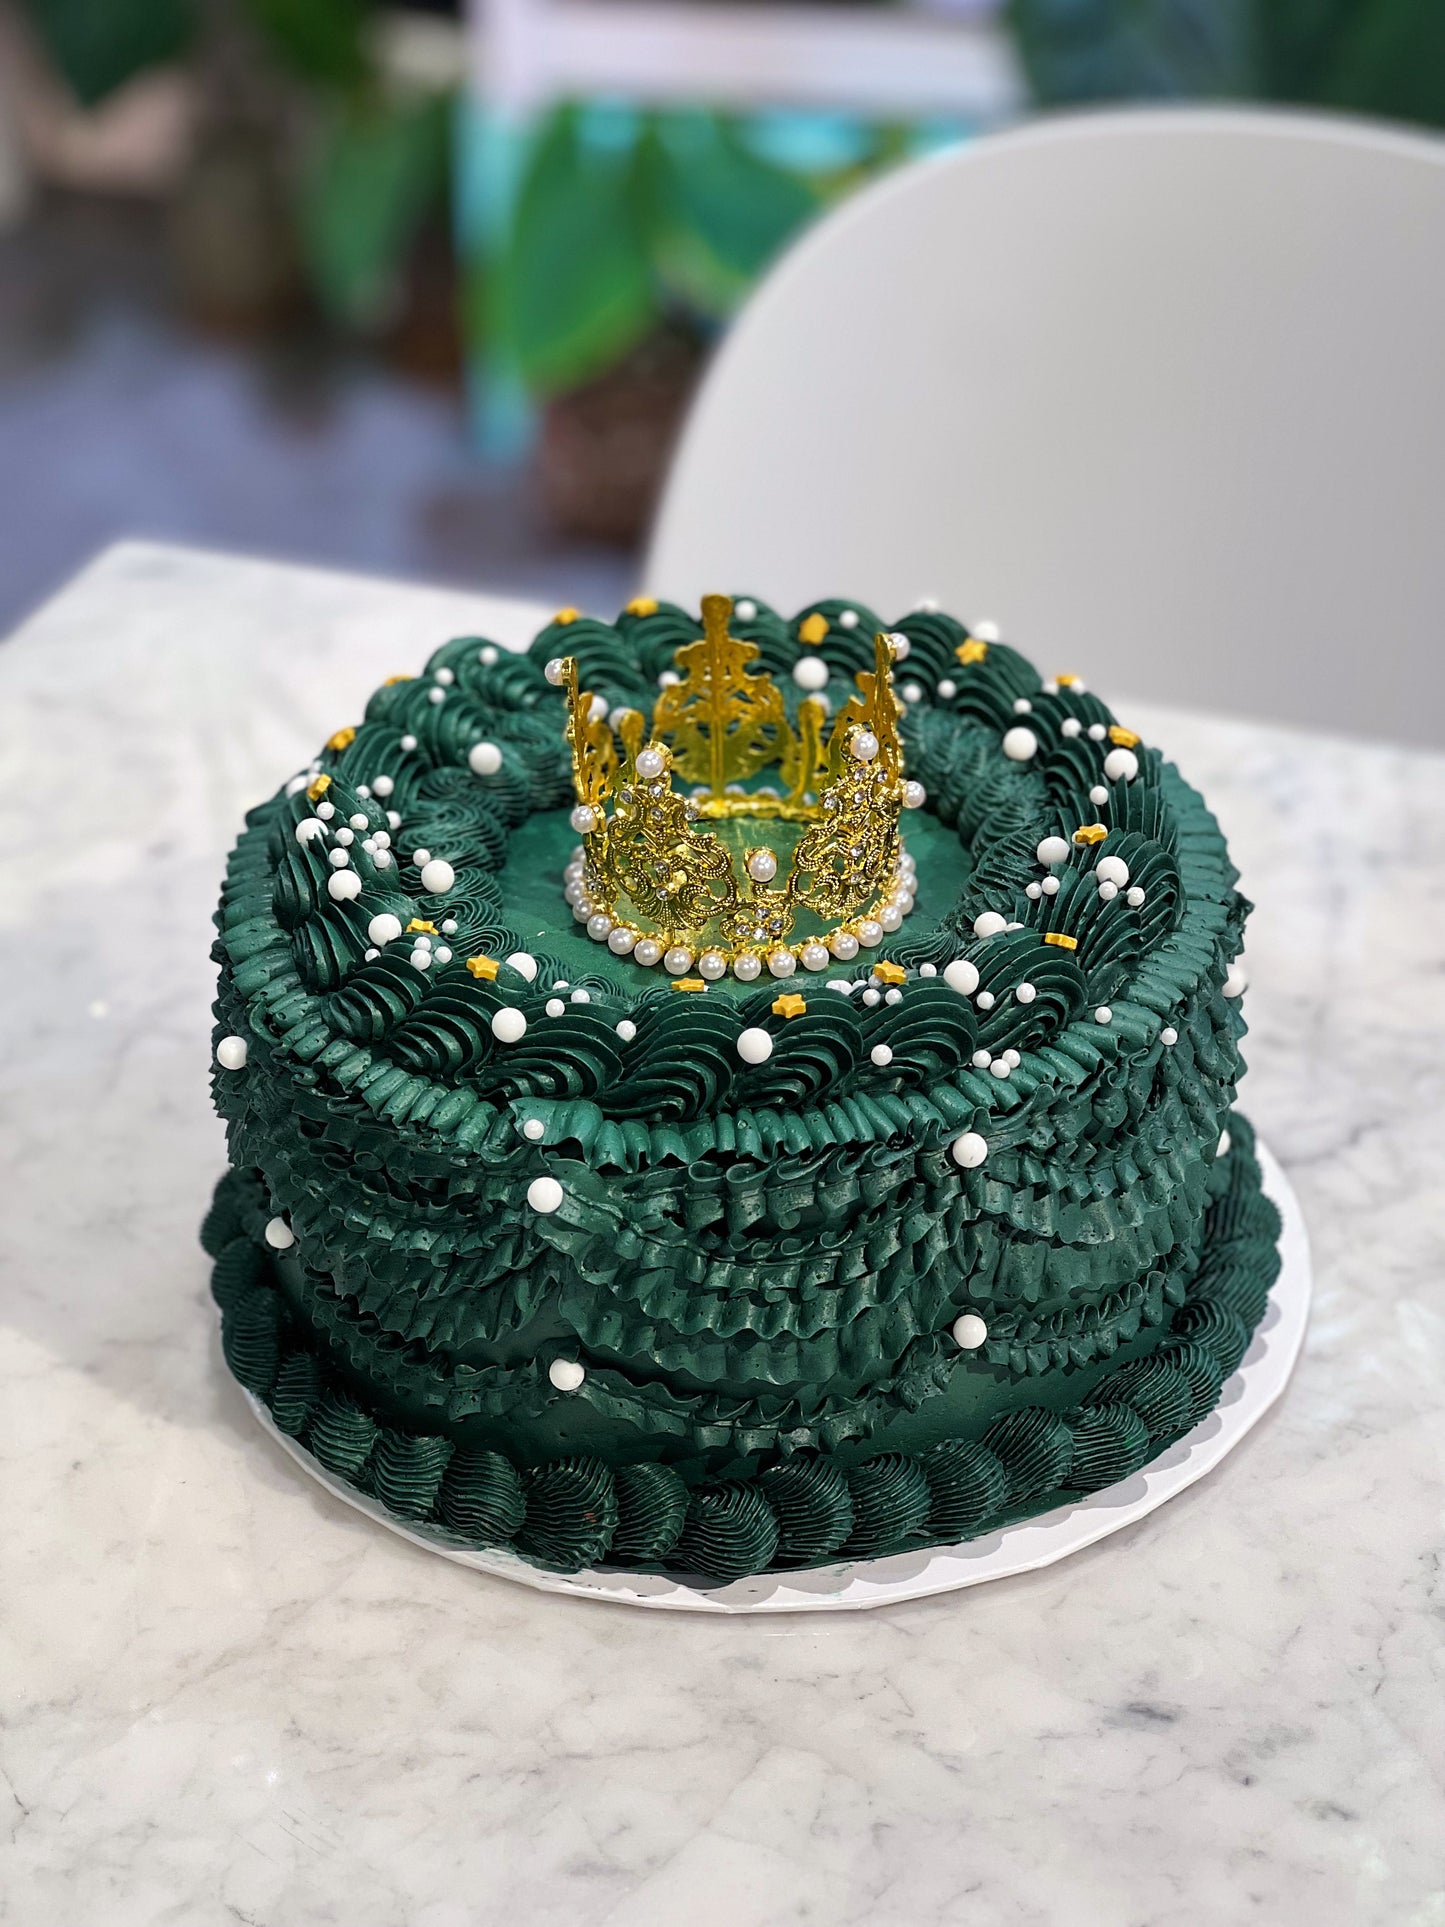 SINFULCAKES - VINTAGE ROUND CAKE